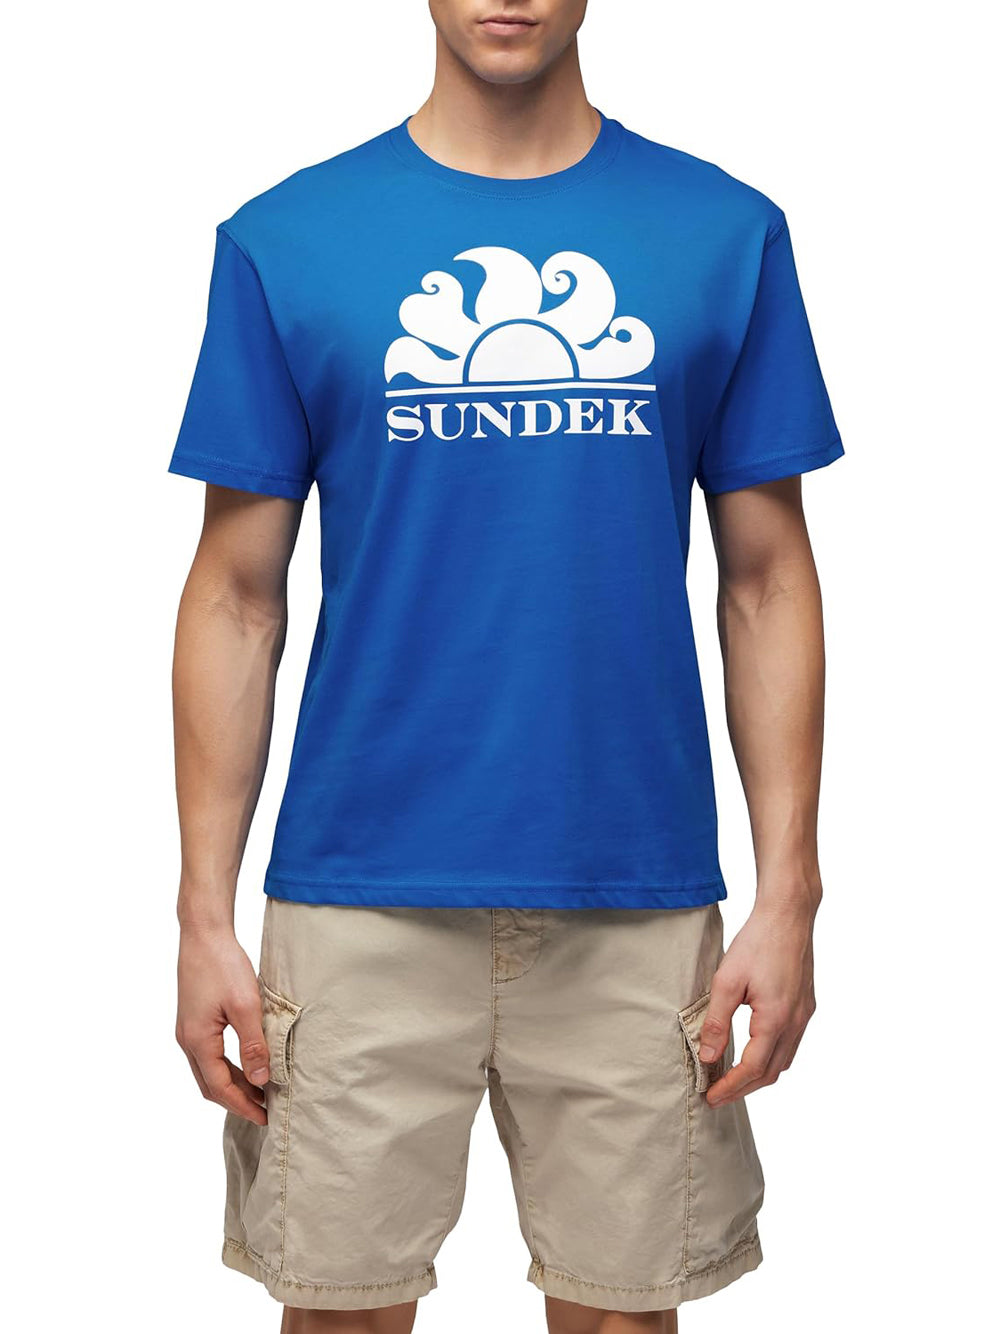 SUNDEK T-shirt Uomo - Blu modello M021TEJ7800